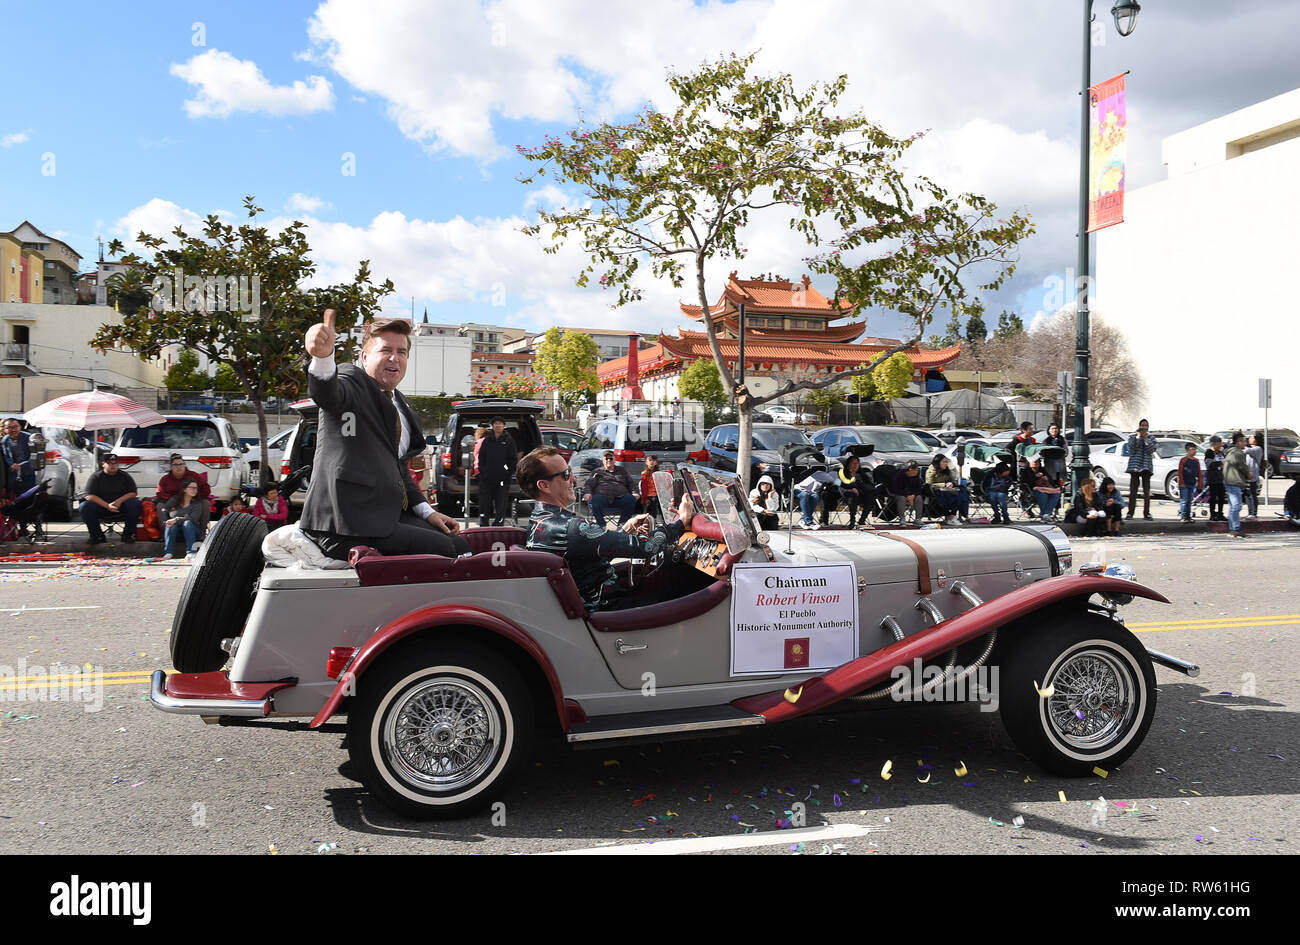 LOS ANGELES - Februar 9, 2019: Robert Vinson Vorsitzender des El Pueblo Historisches Denkmal Behörde Fahrten im Los Angeles Chinese New Year Parade. Stockfoto